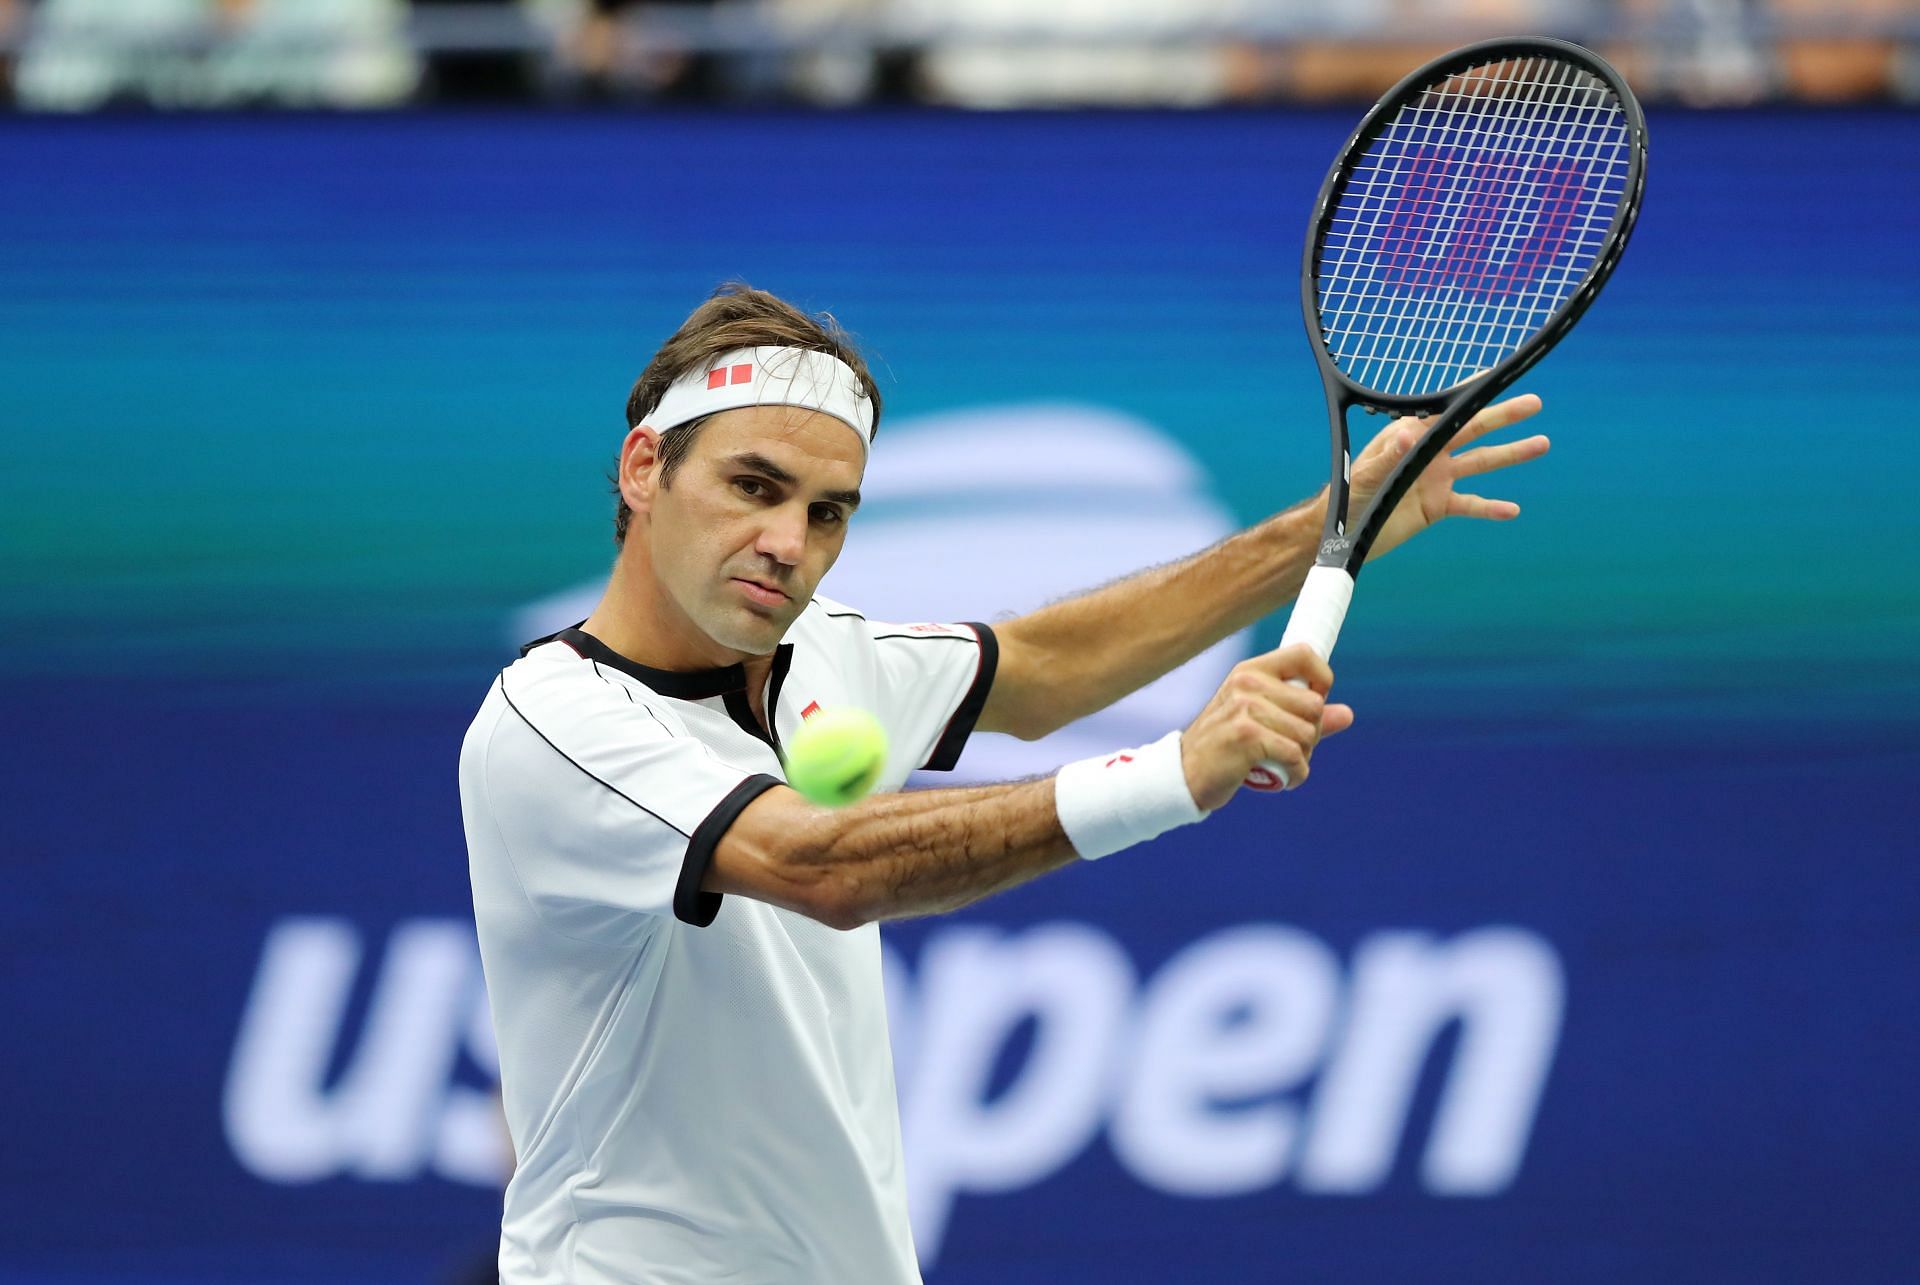 Roger Federer has five titles in New York